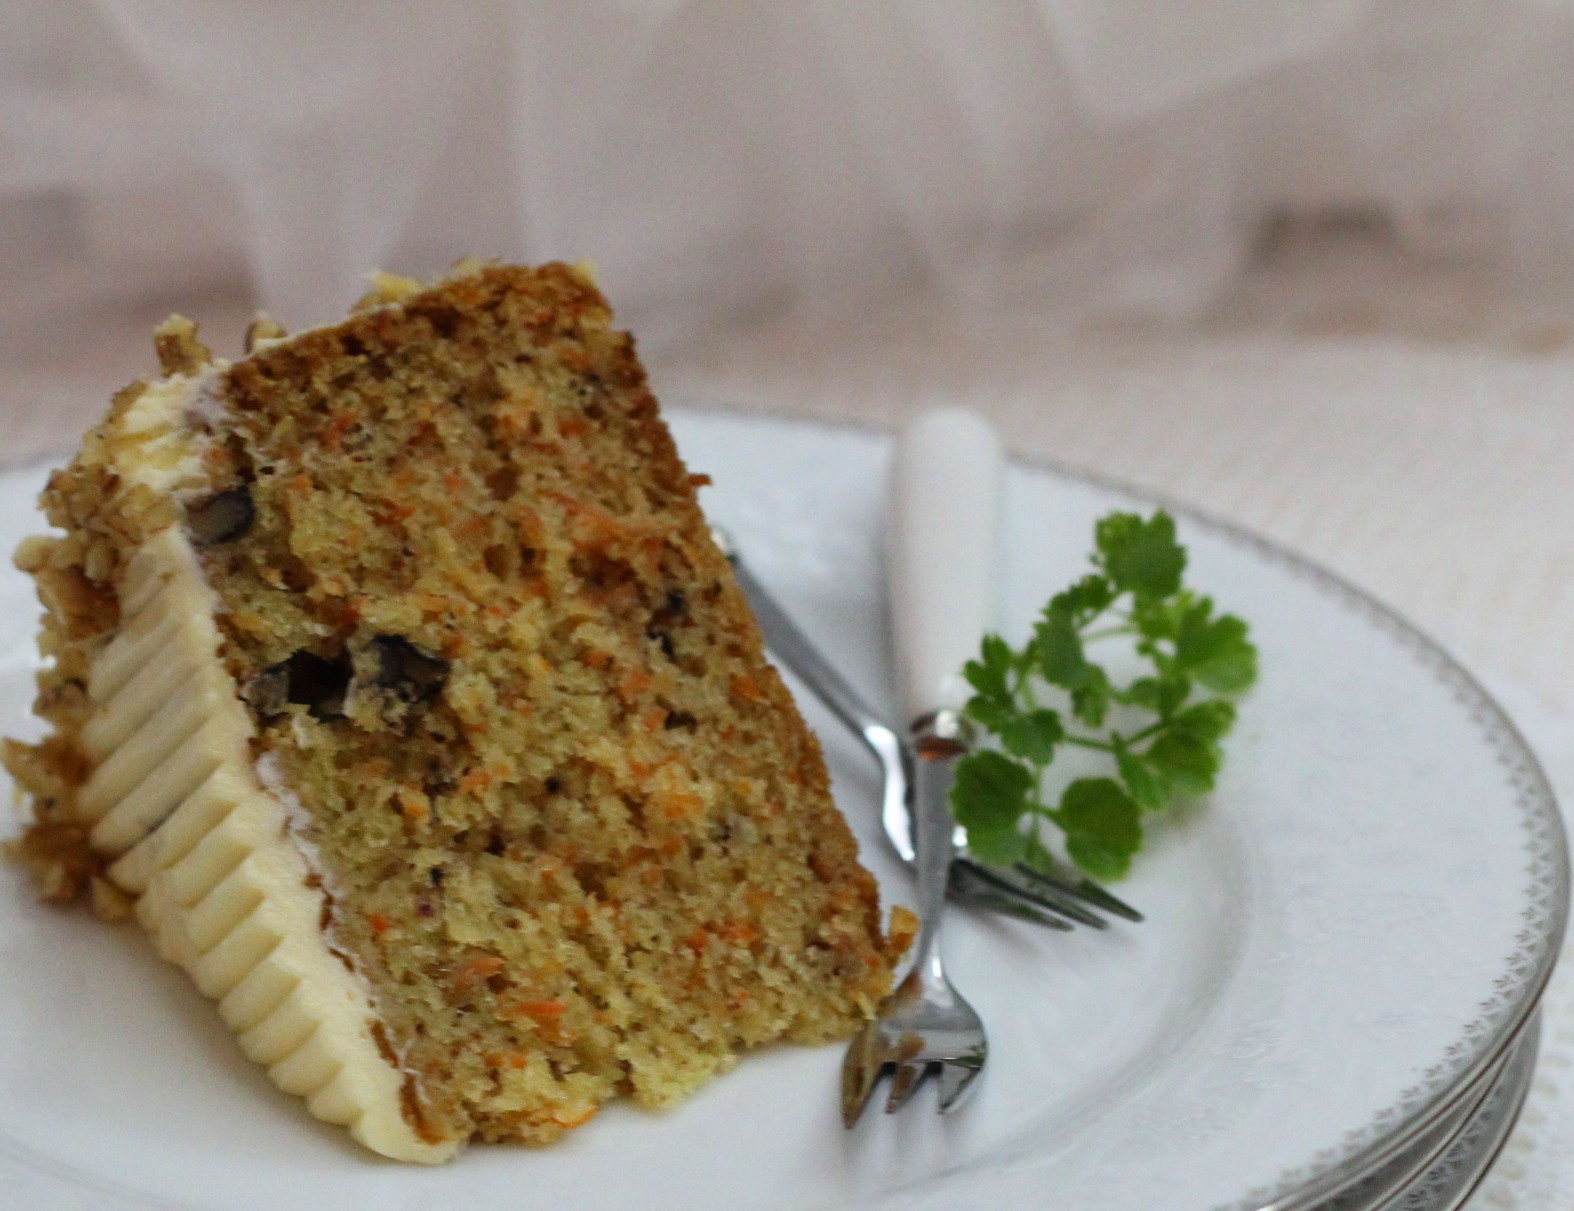 Resepi Butter Cake The Kitchen Guardian - Contohlah n